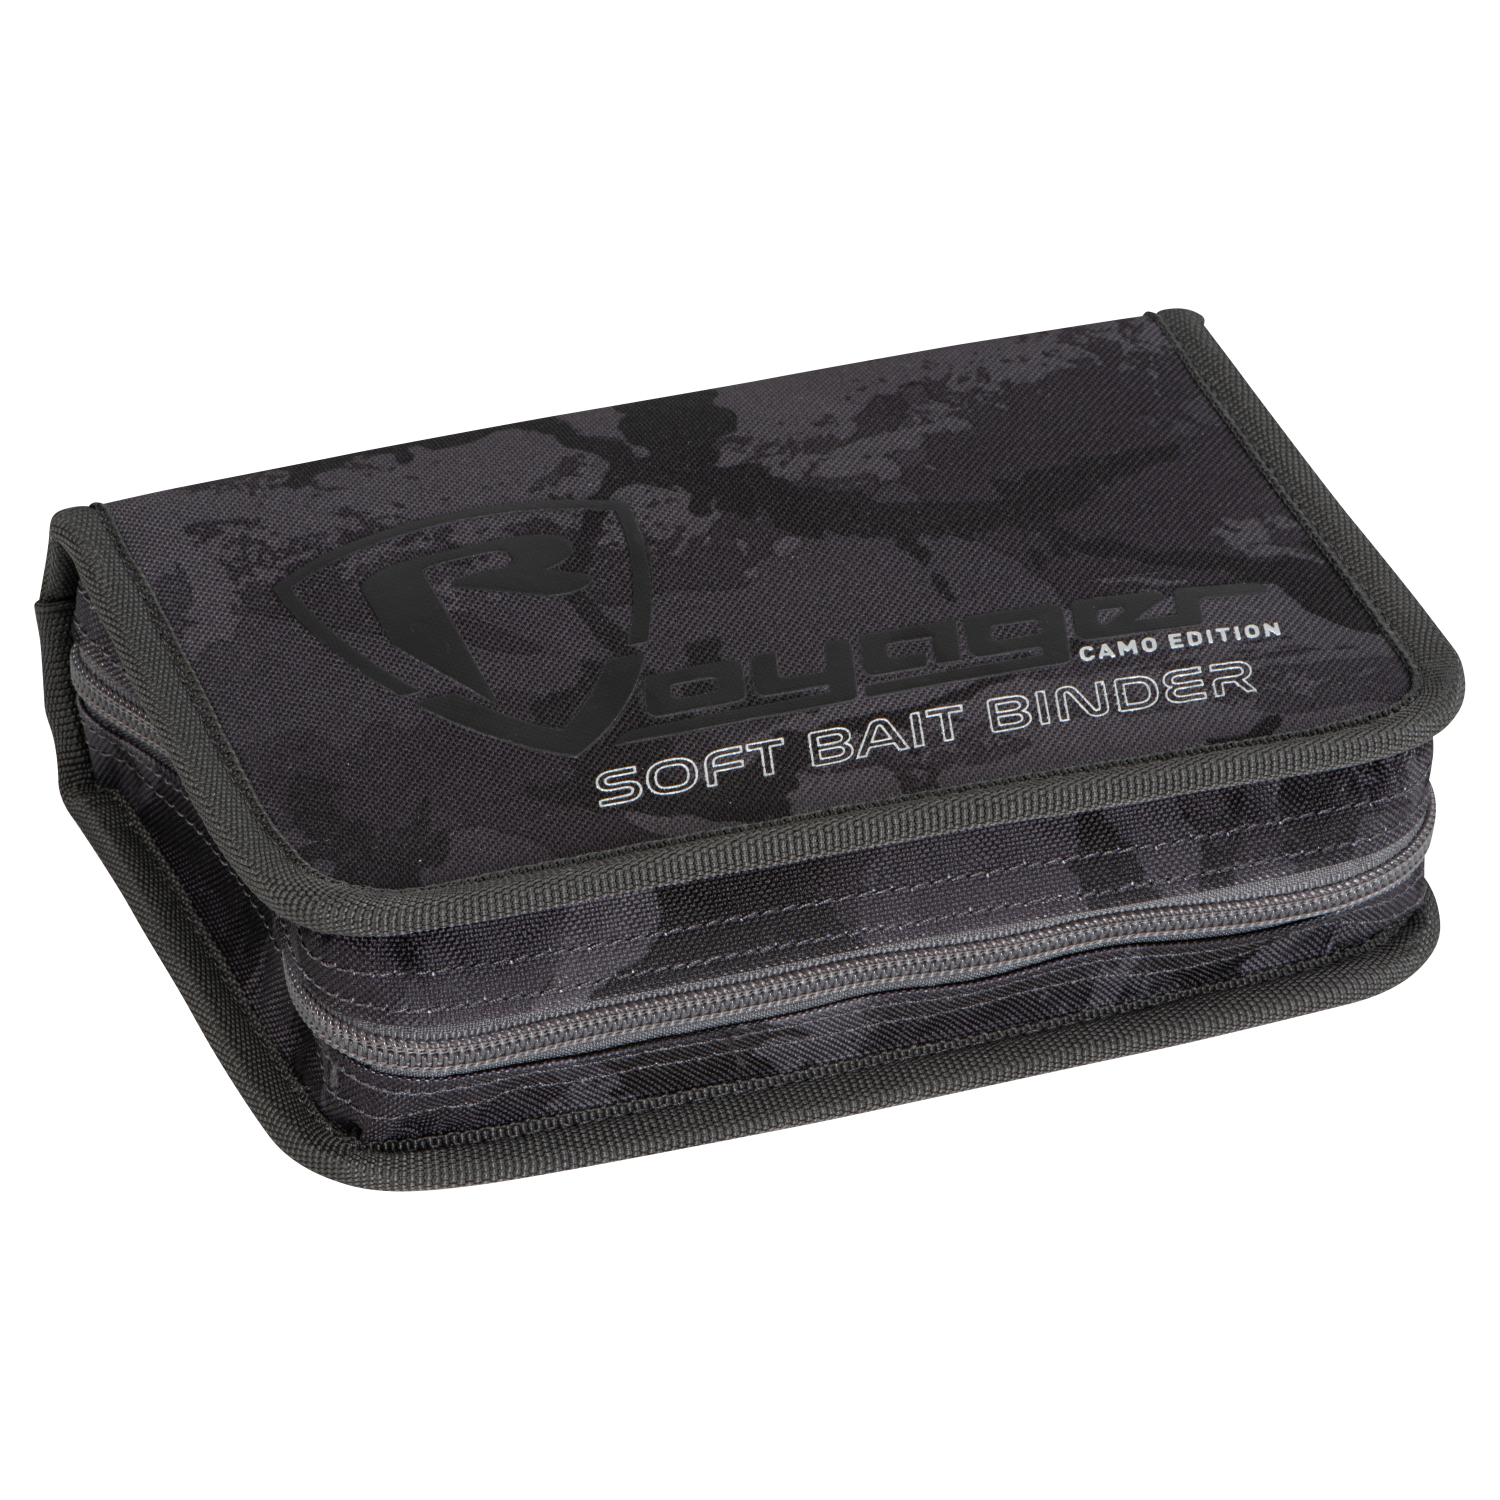 Fox Rage Soft Bait Binder Voyager® Camo at low prices